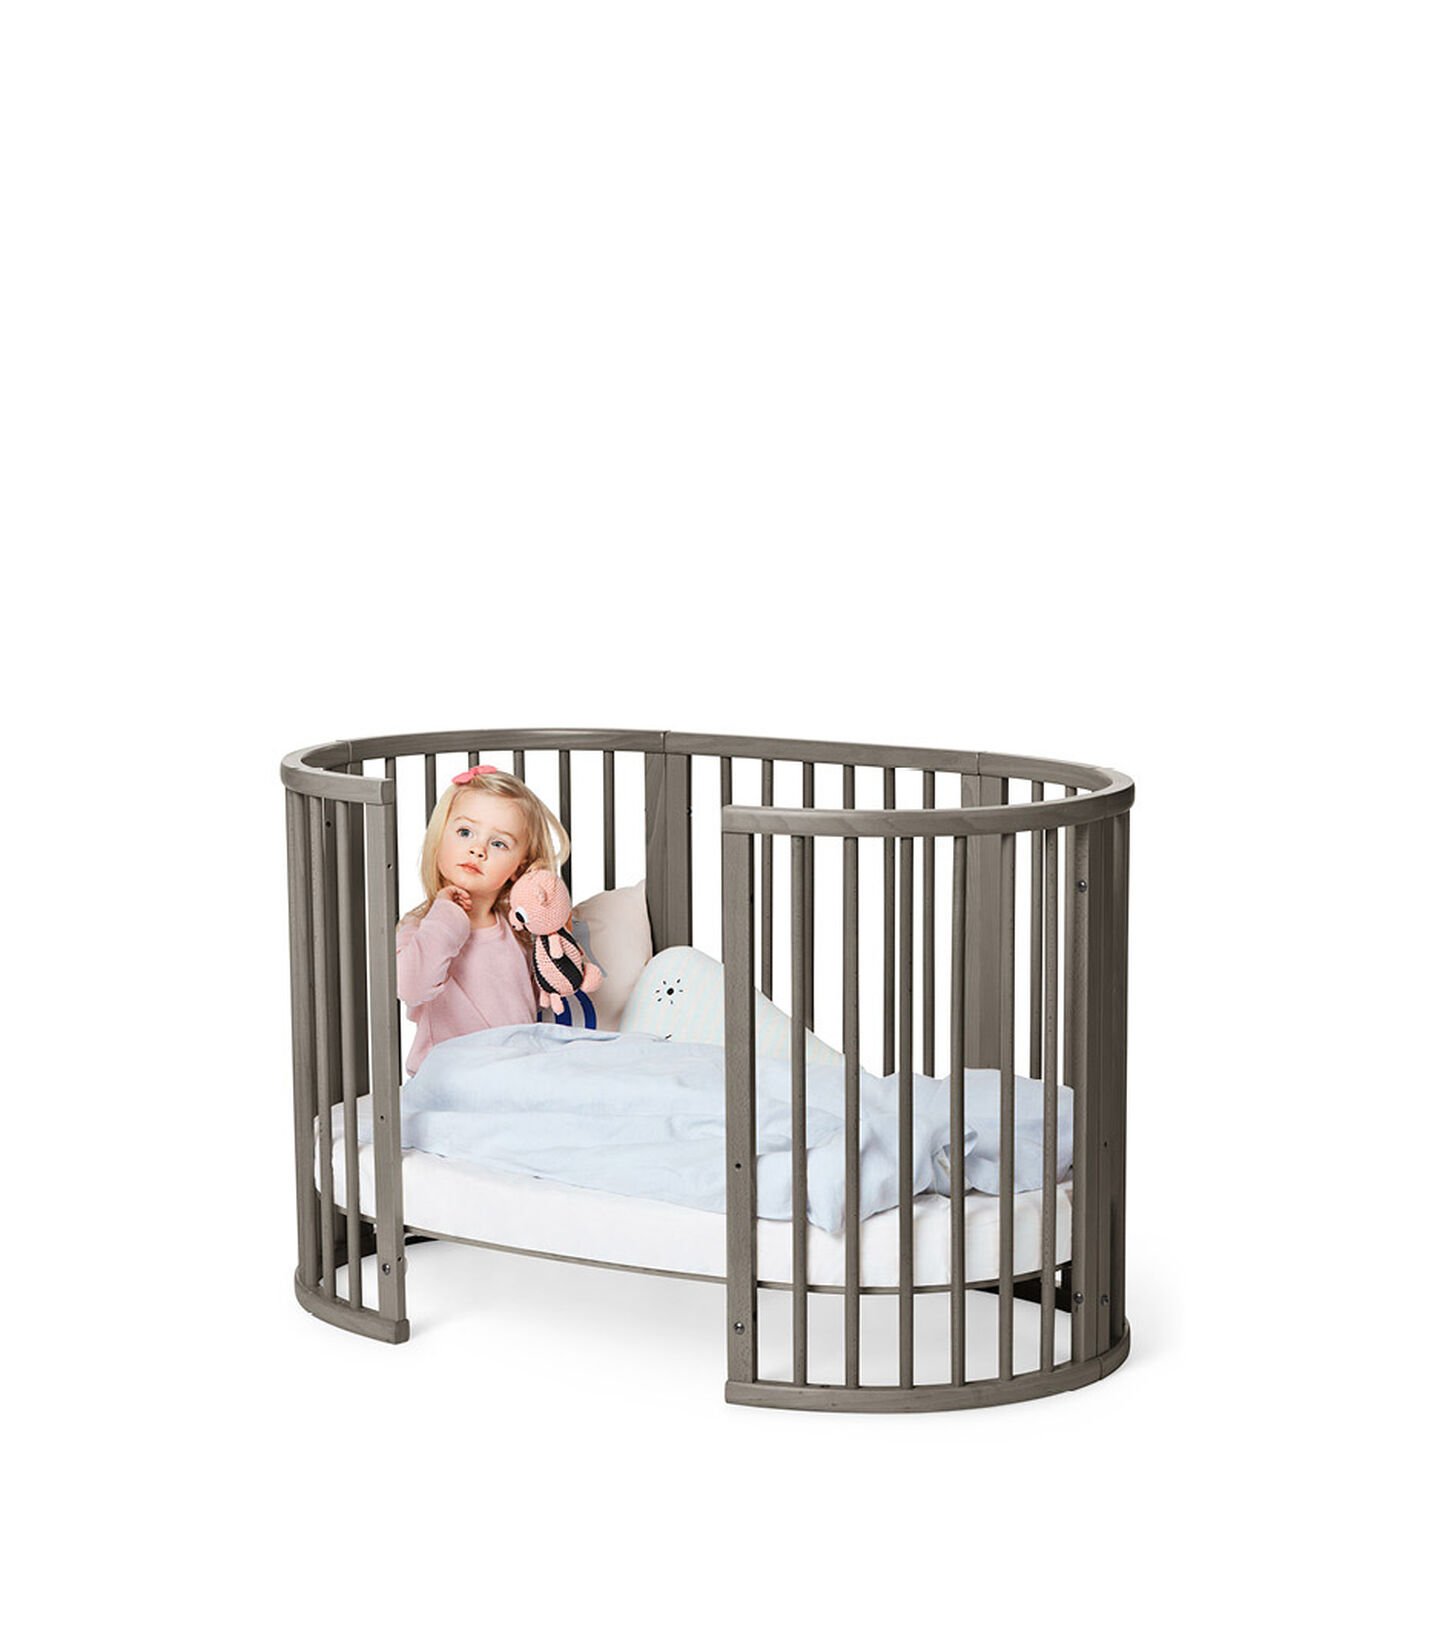 Stokke® Sleepi™ Extension Bed Hazy Grey, 霧灰色, mainview view 2